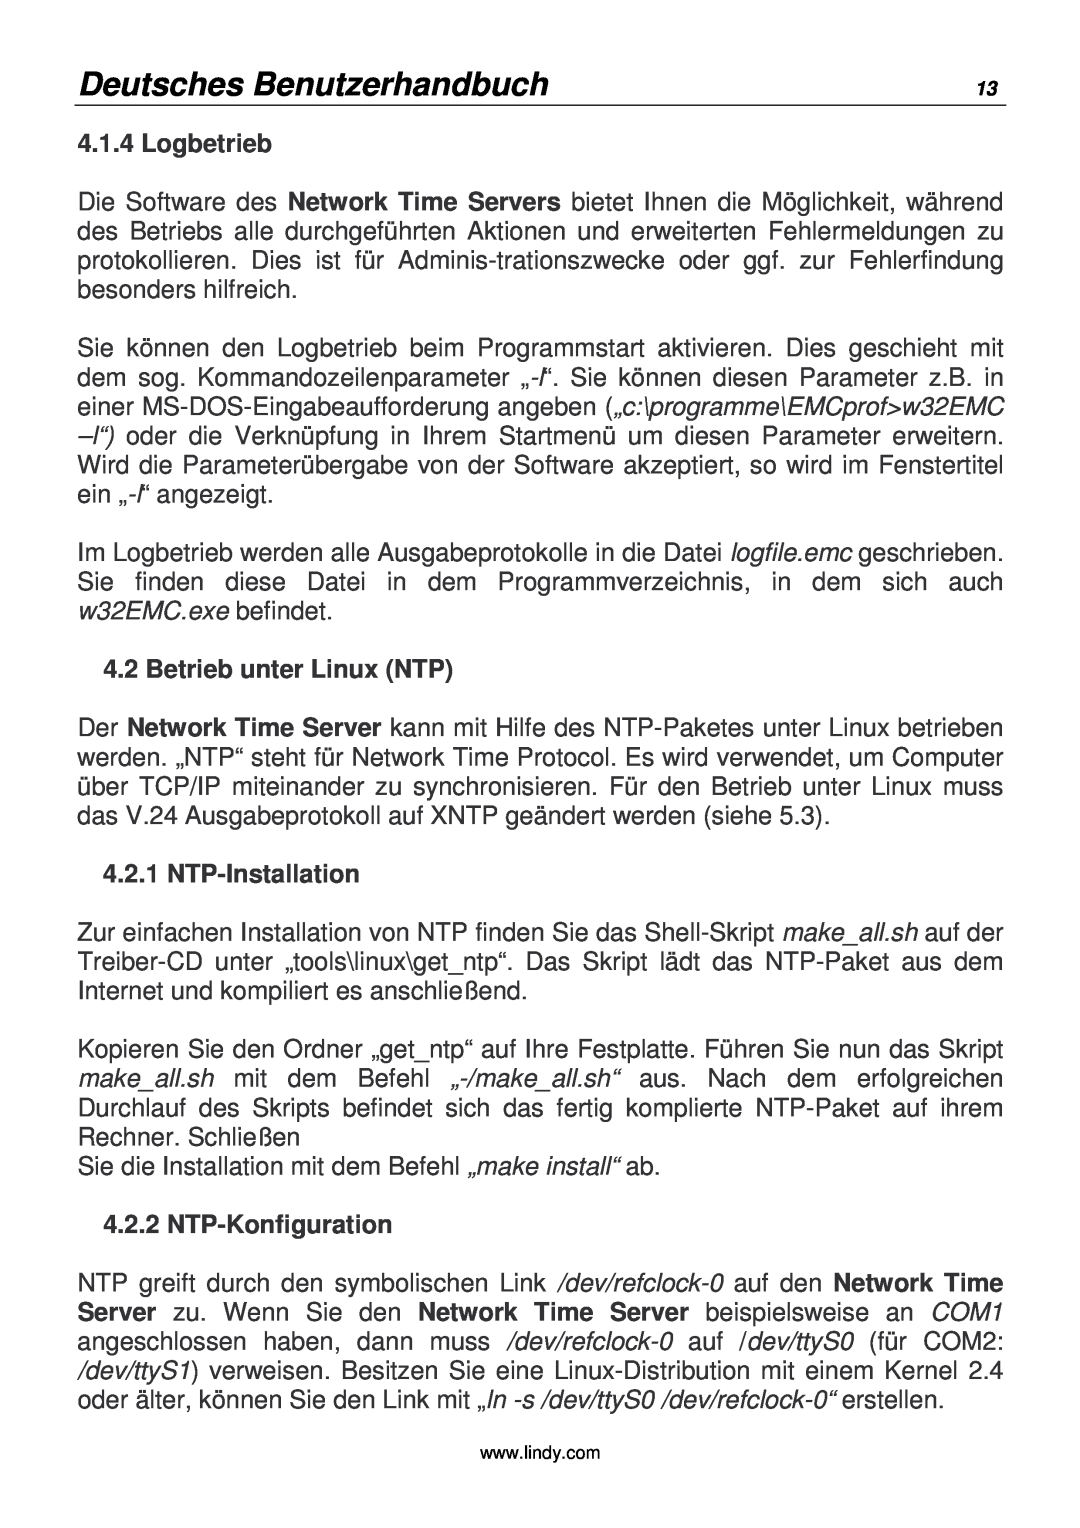 Lindy 20988 manual Deutsches Benutzerhandbuch, Logbetrieb, Betrieb unter Linux NTP, NTP-Installation, NTP-Konfiguration 